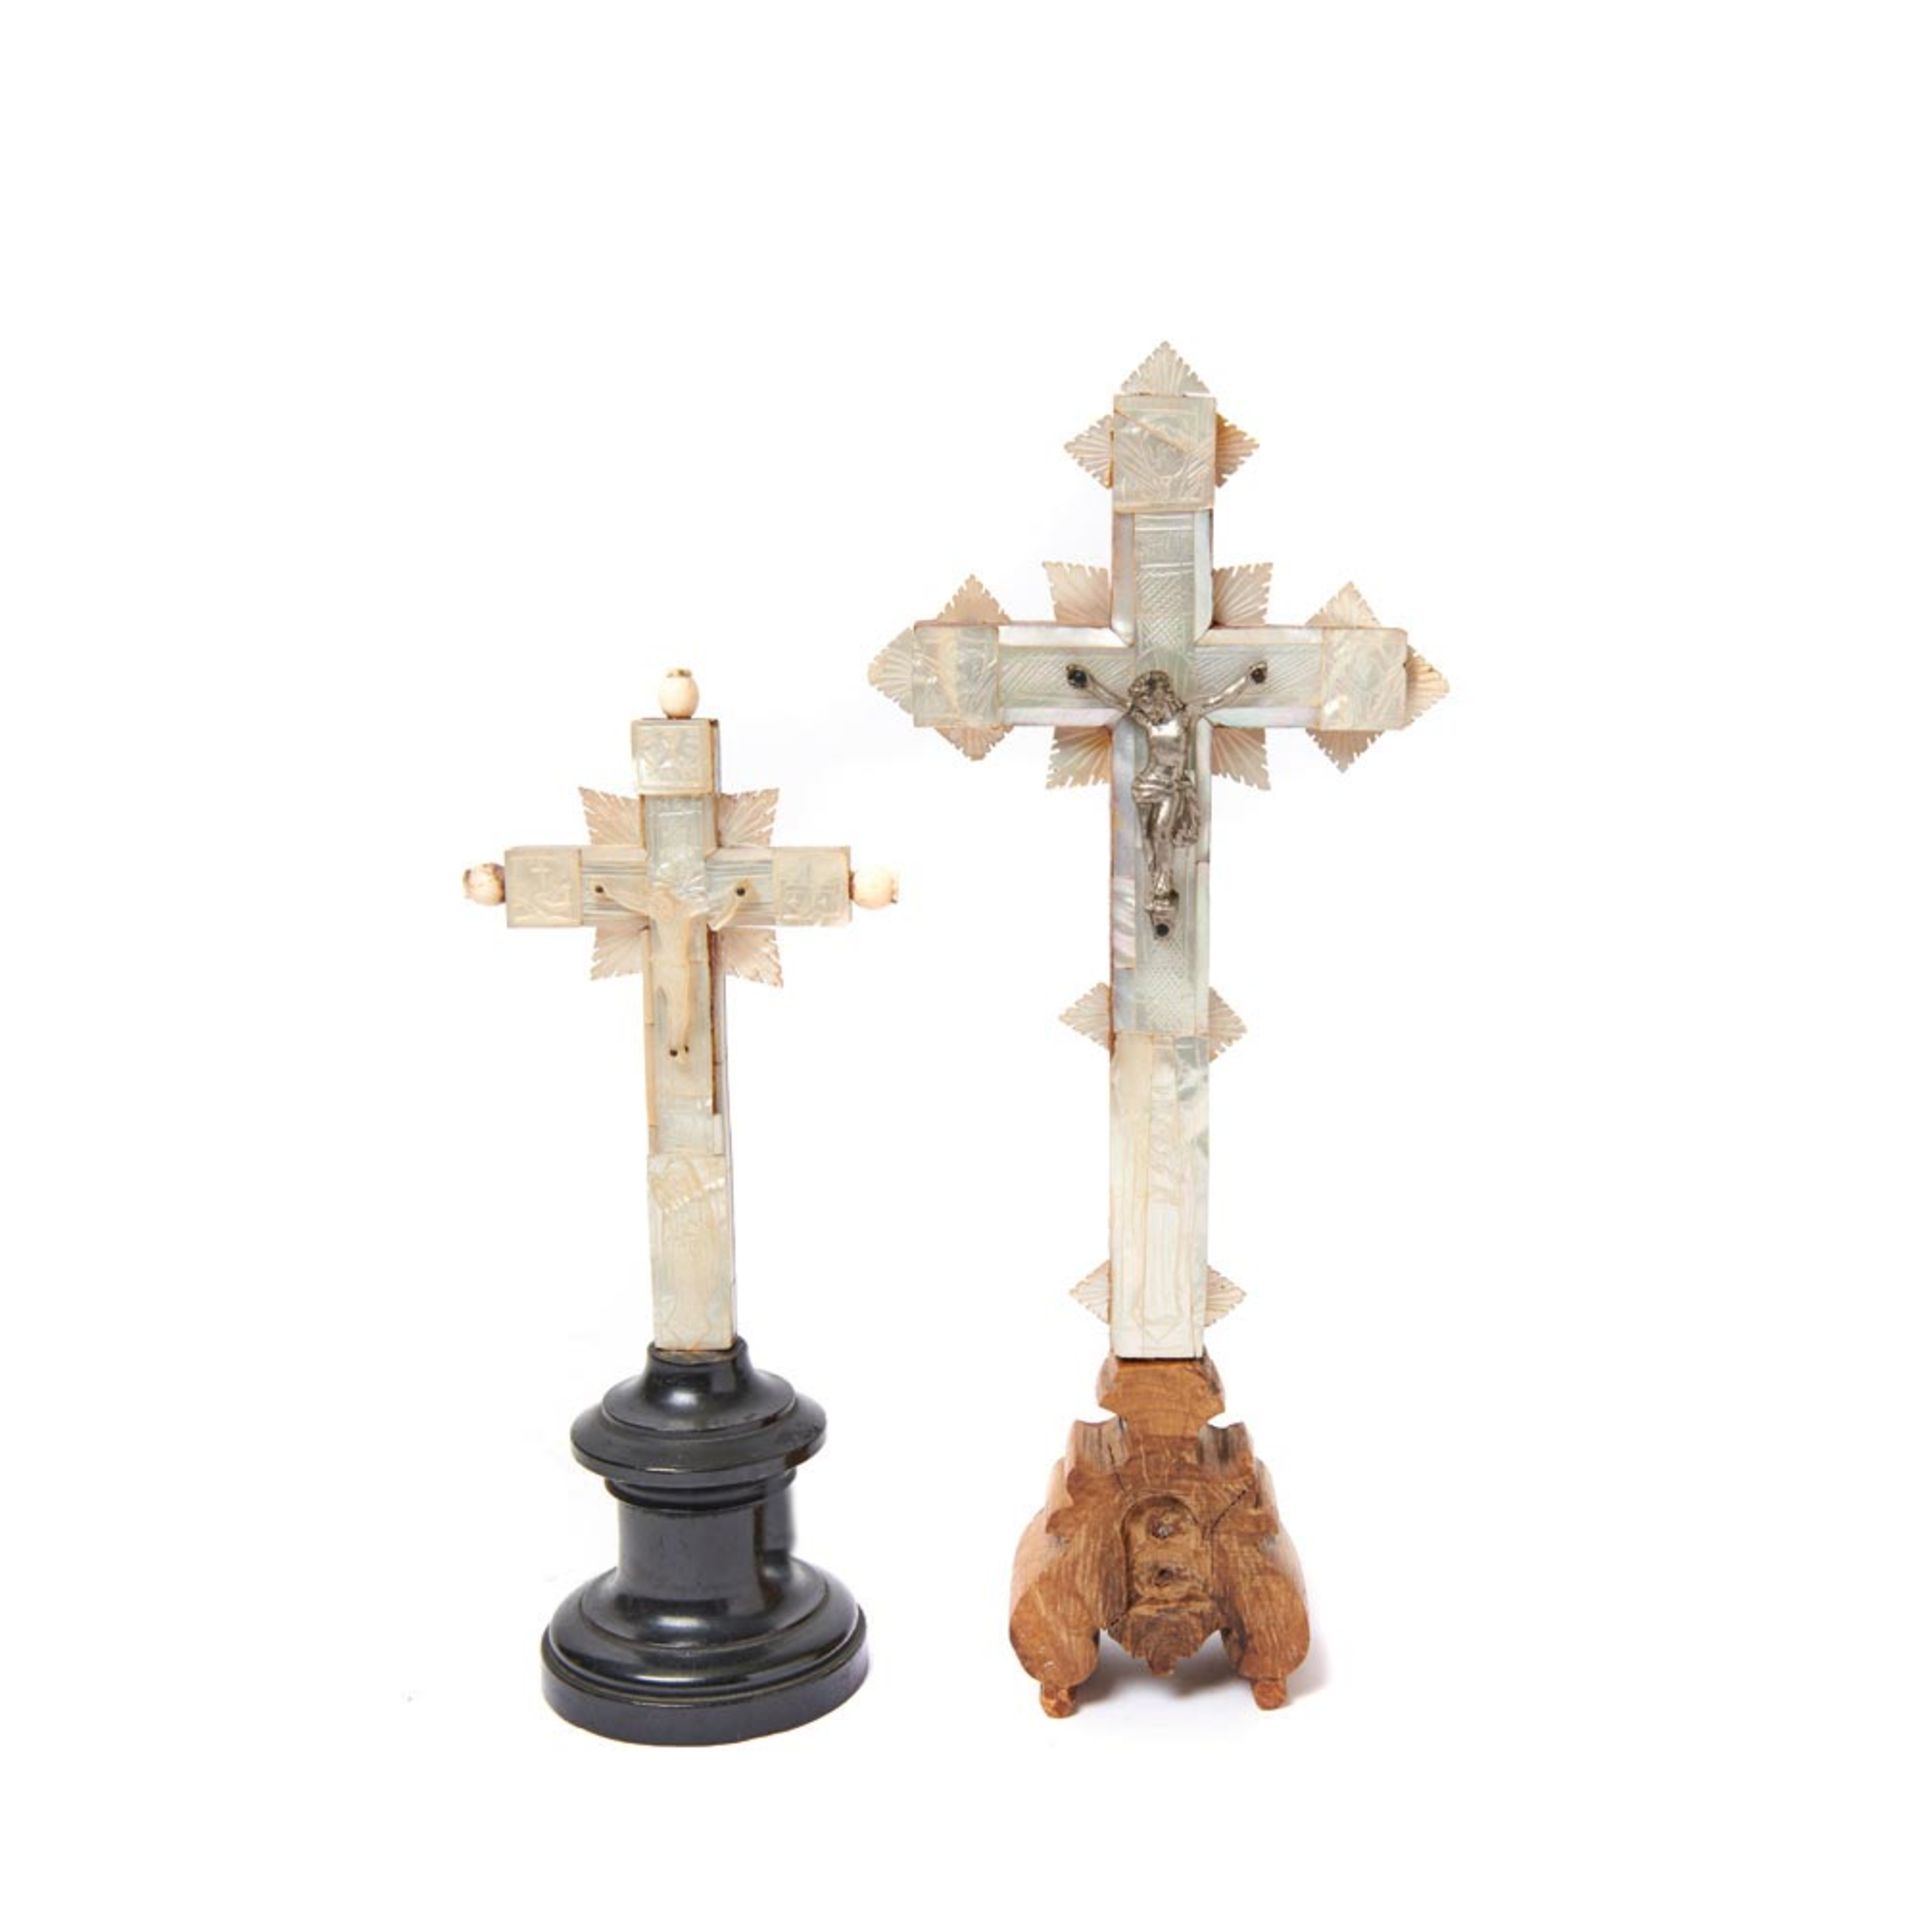 Lote de dos cruces de Jerusalén en madera tallada, madreperla, hueso y metal, fles. del s.XIX. 27